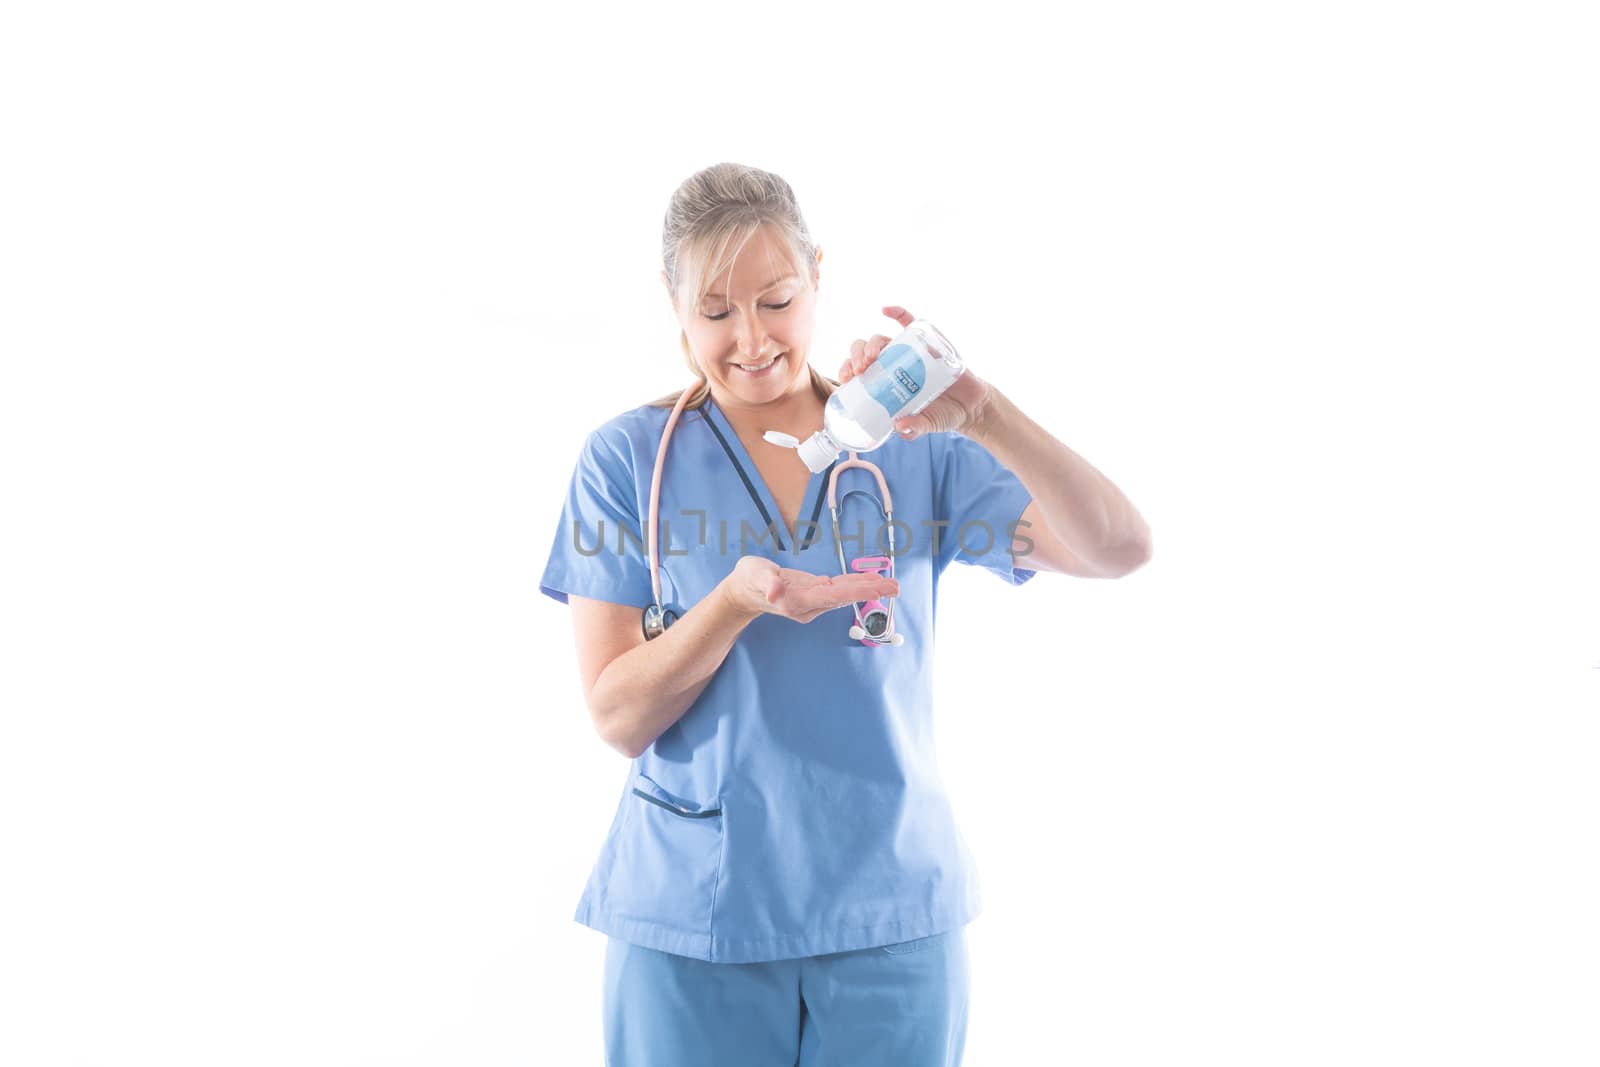 Nurse using or demonstrating hand sanitizer by lovleah